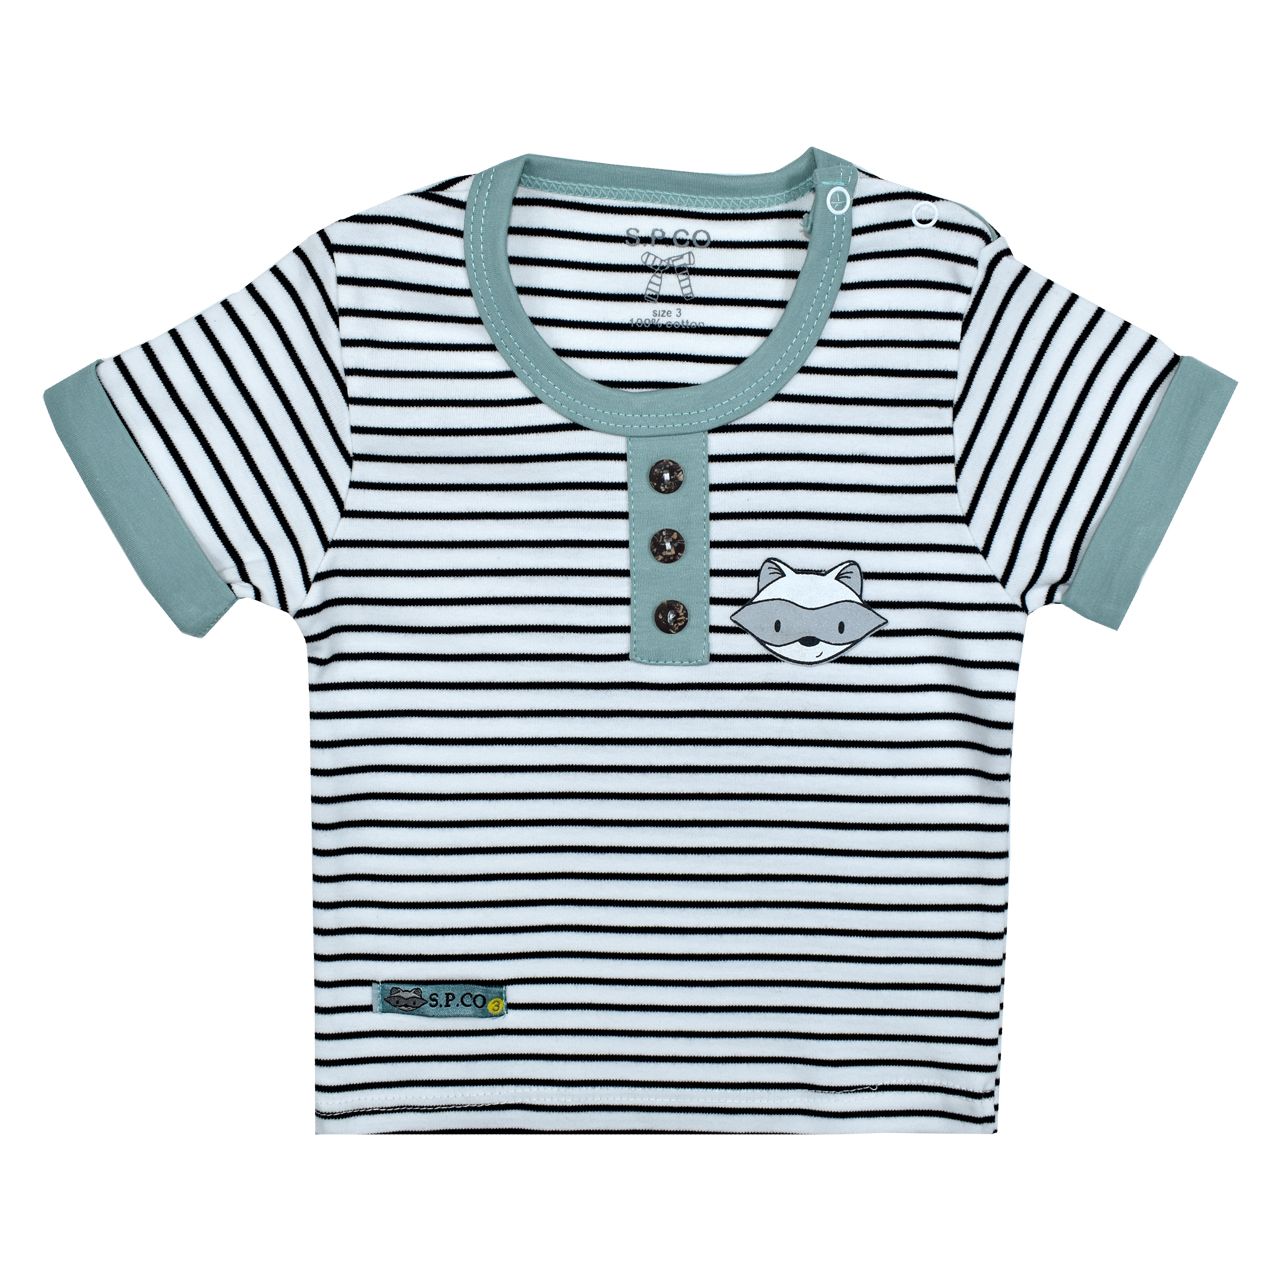 ست تی شرت و شلوارک نوزادی اسپیکو مدل رافائل -  - 2